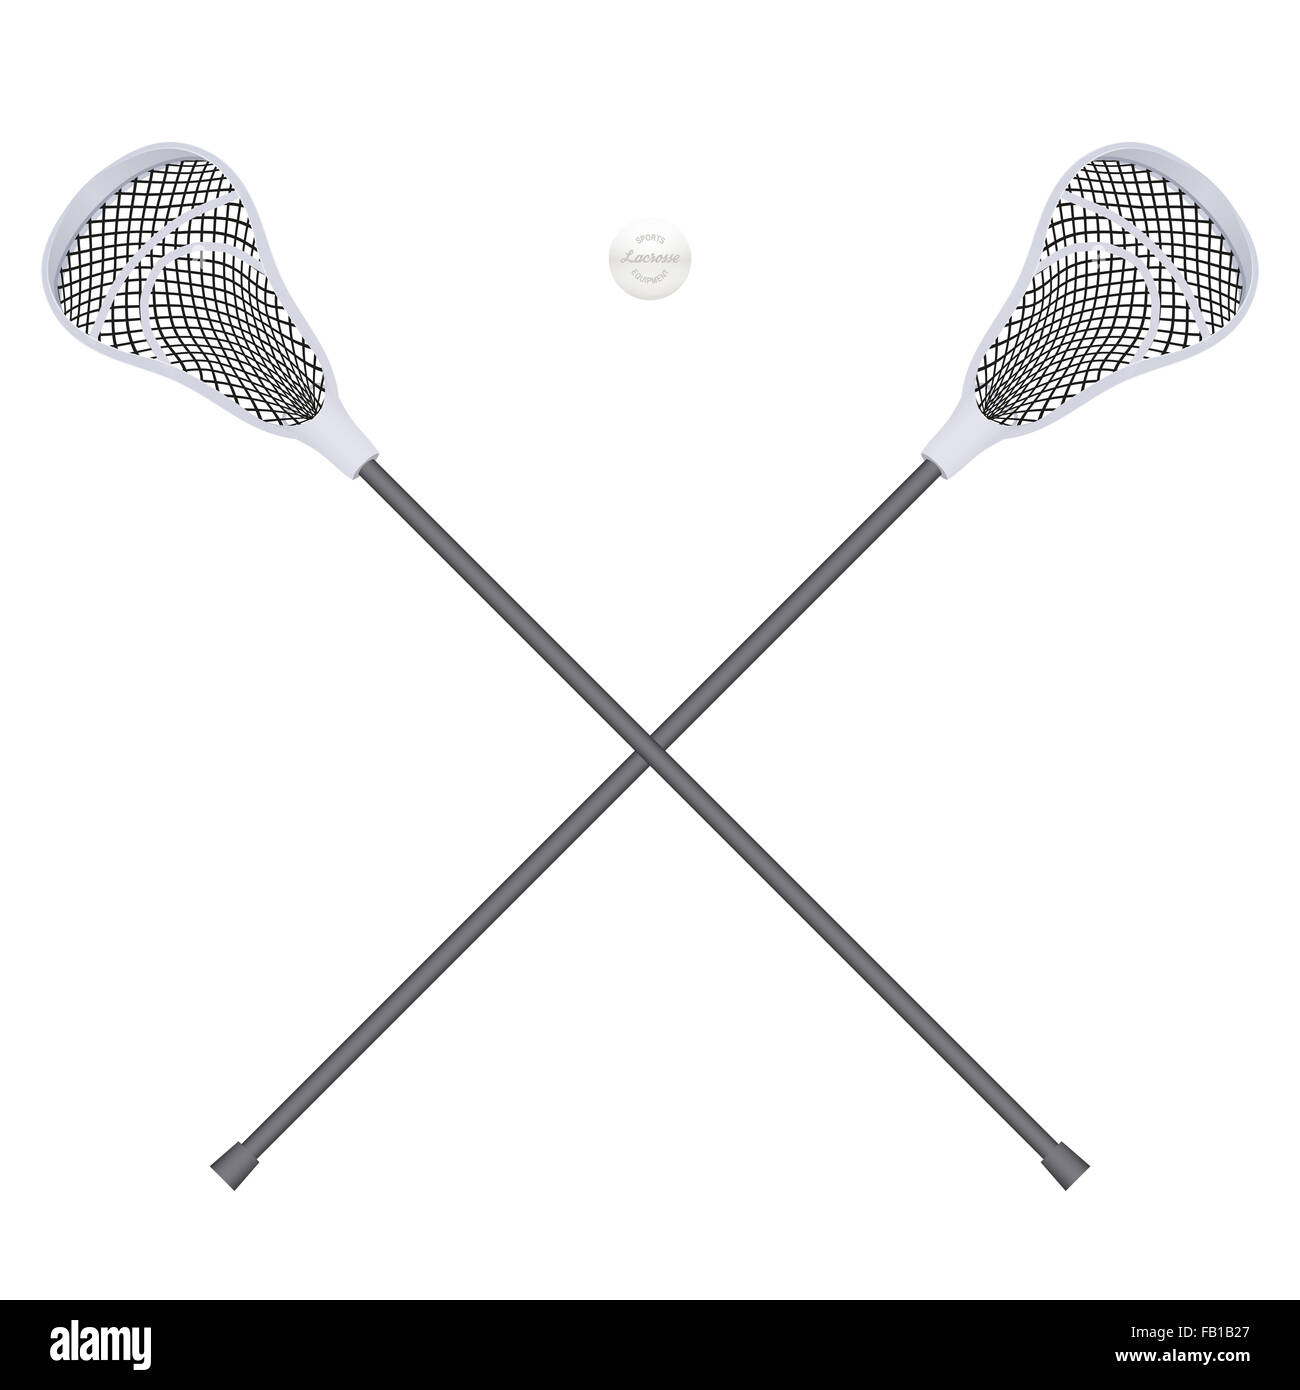 Lacrosse stick -Fotos und -Bildmaterial in hoher Auflösung – Alamy